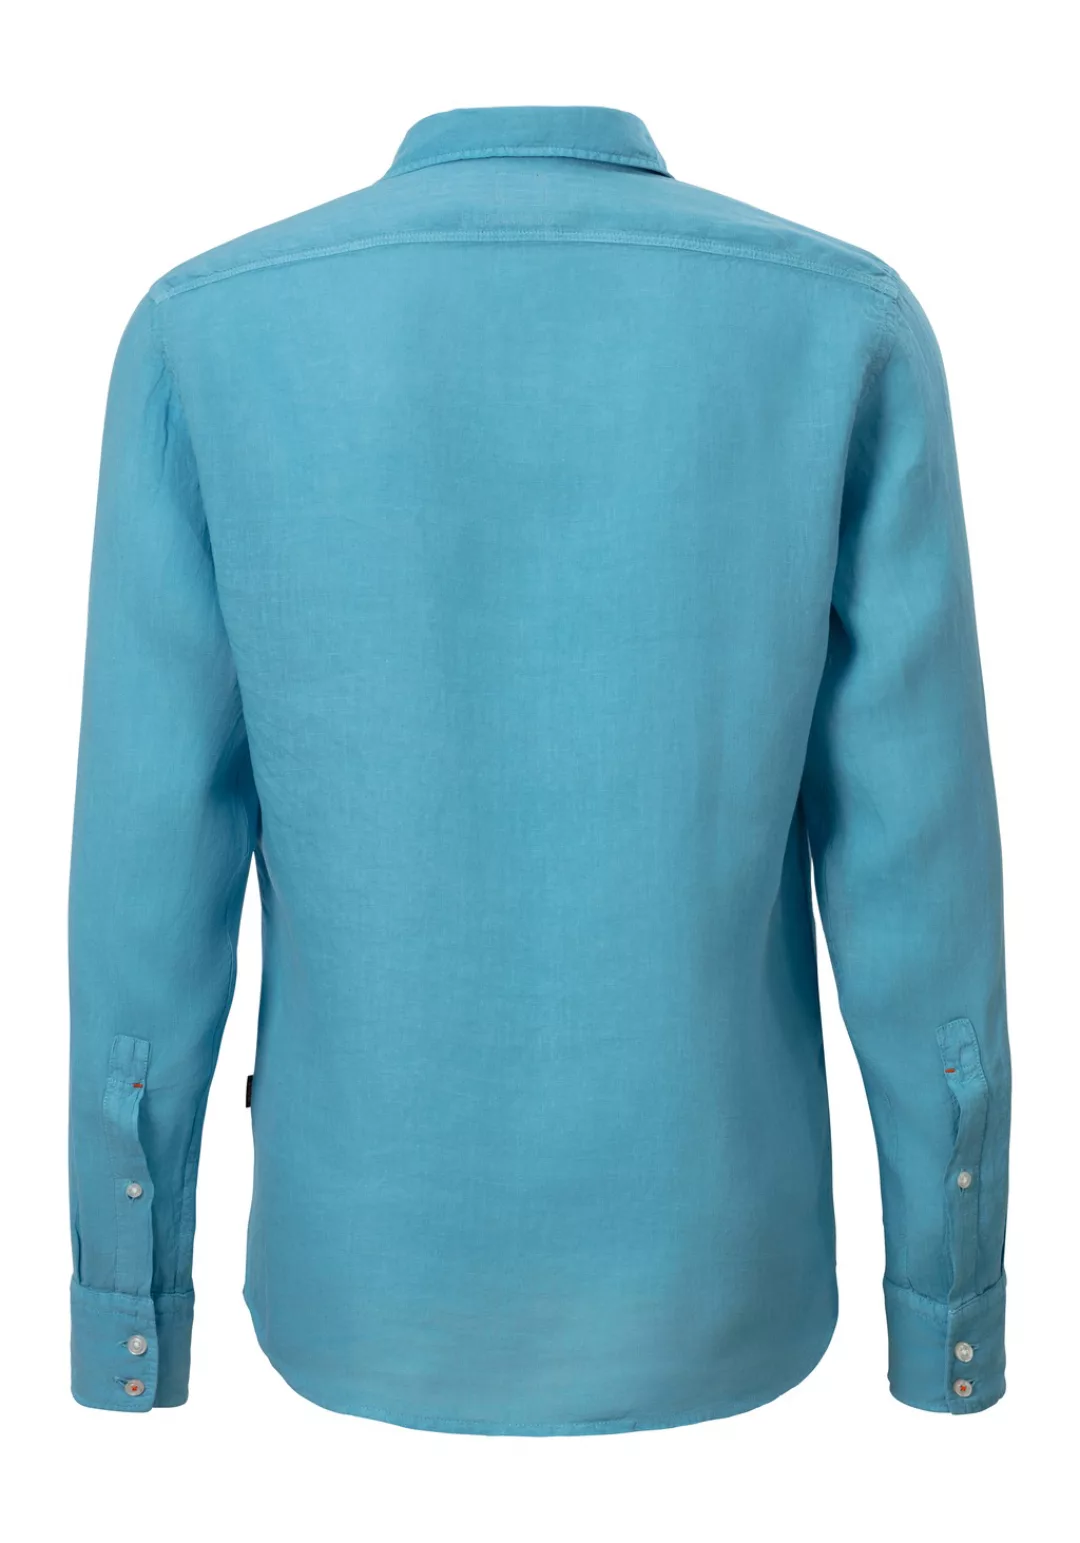 BOSS ORANGE Langarmshirt, mit BOSS-Kontrastdetails günstig online kaufen